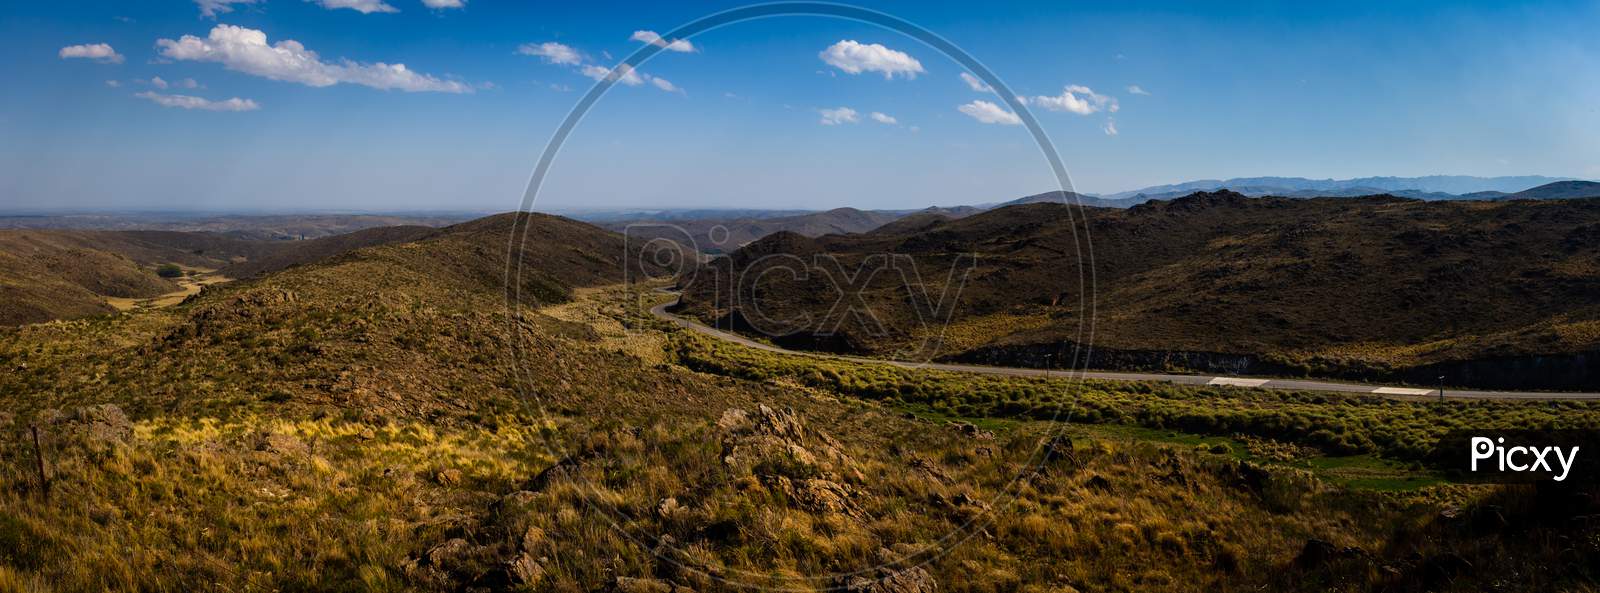 Beautiful Panoramic View Of The San Luis Mountains In Argentina. Highway Runs Between Arid Mountainous Soil. Mountainous Landscape